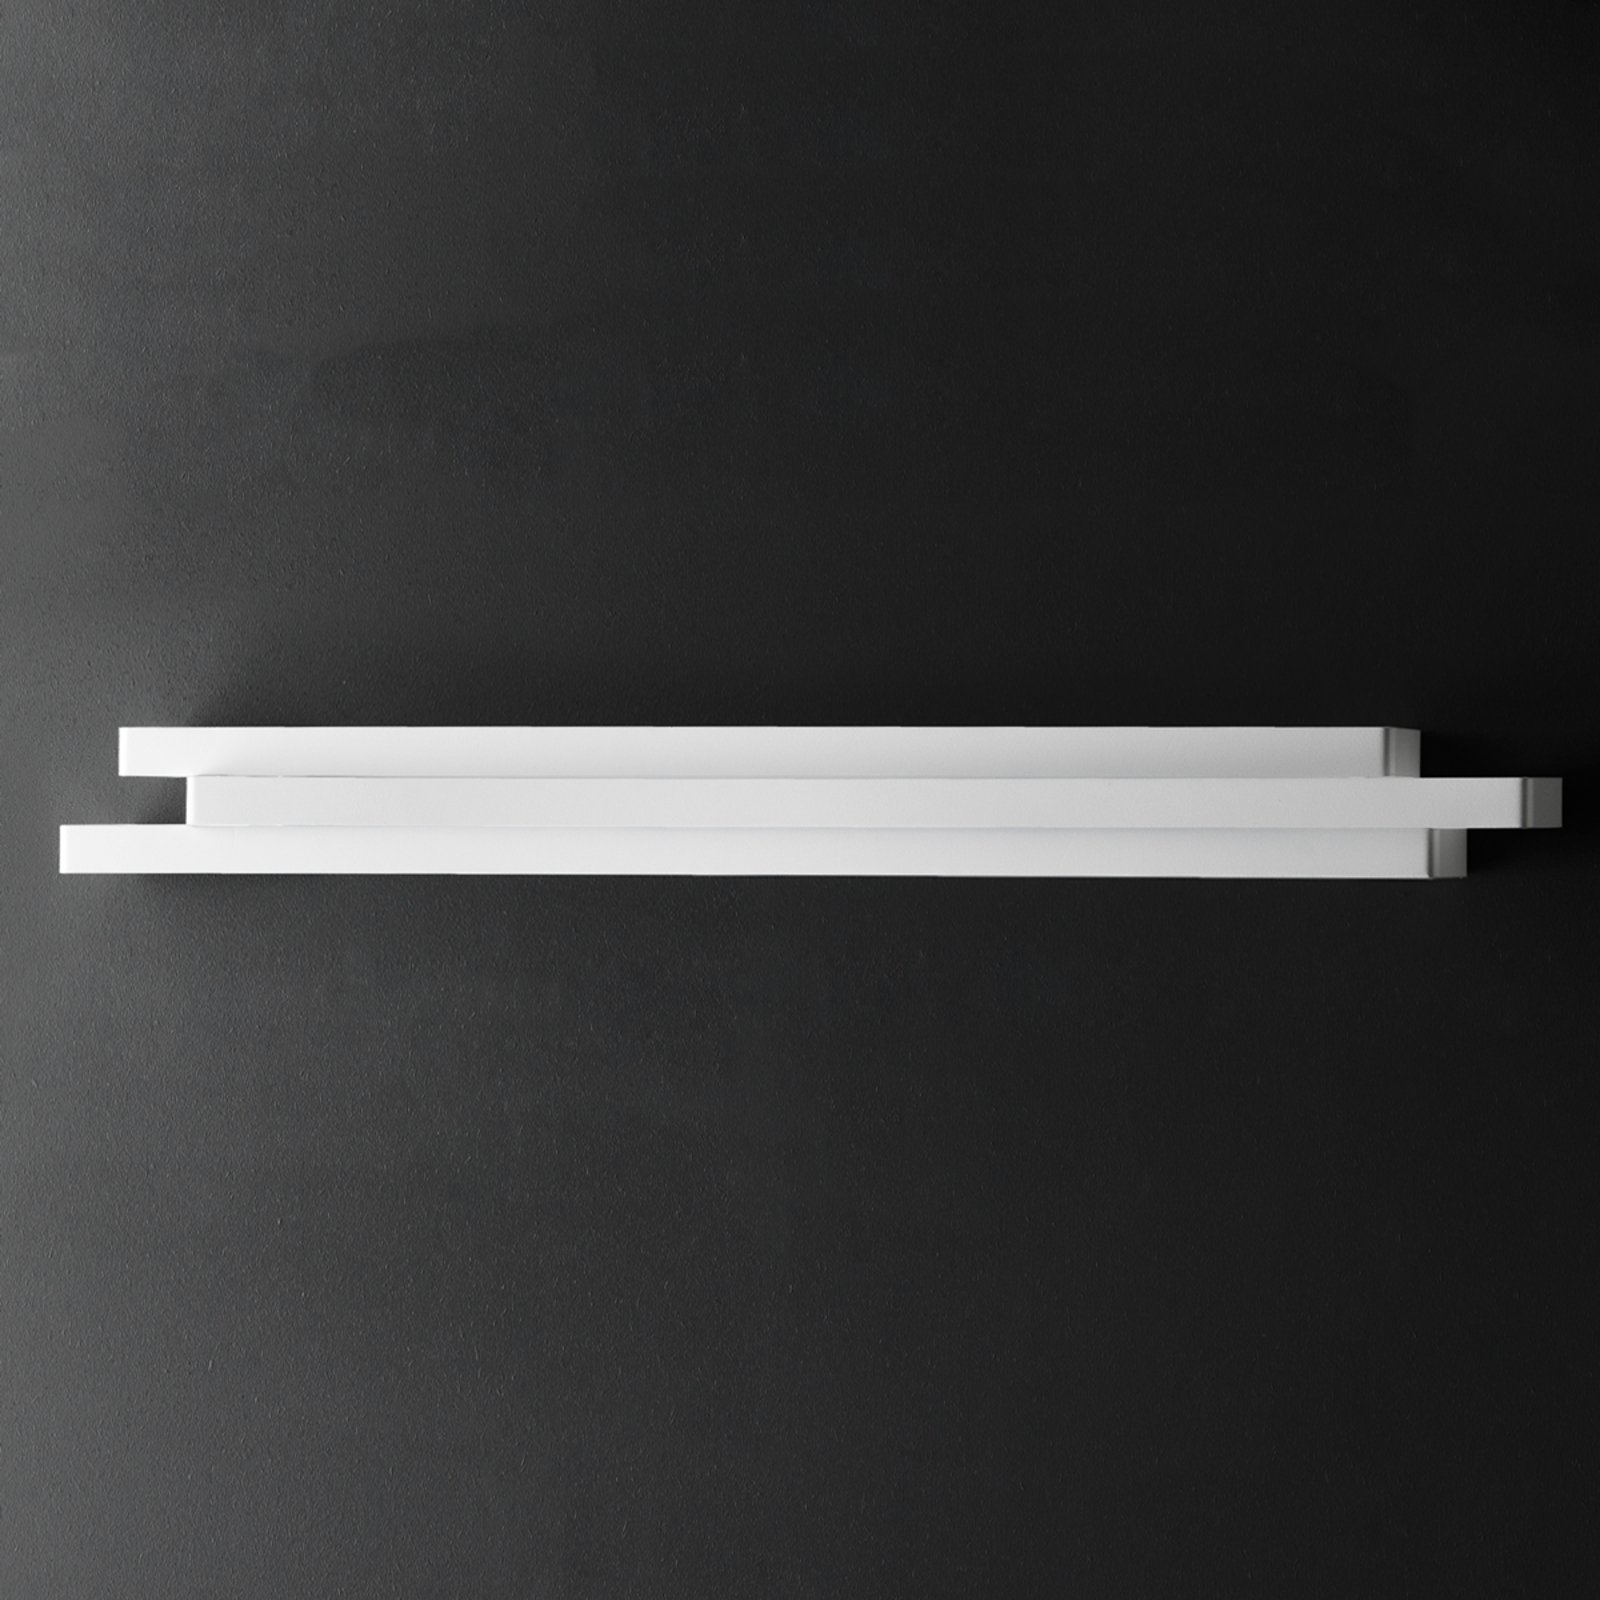 Escape LED wall light, 80 cm long